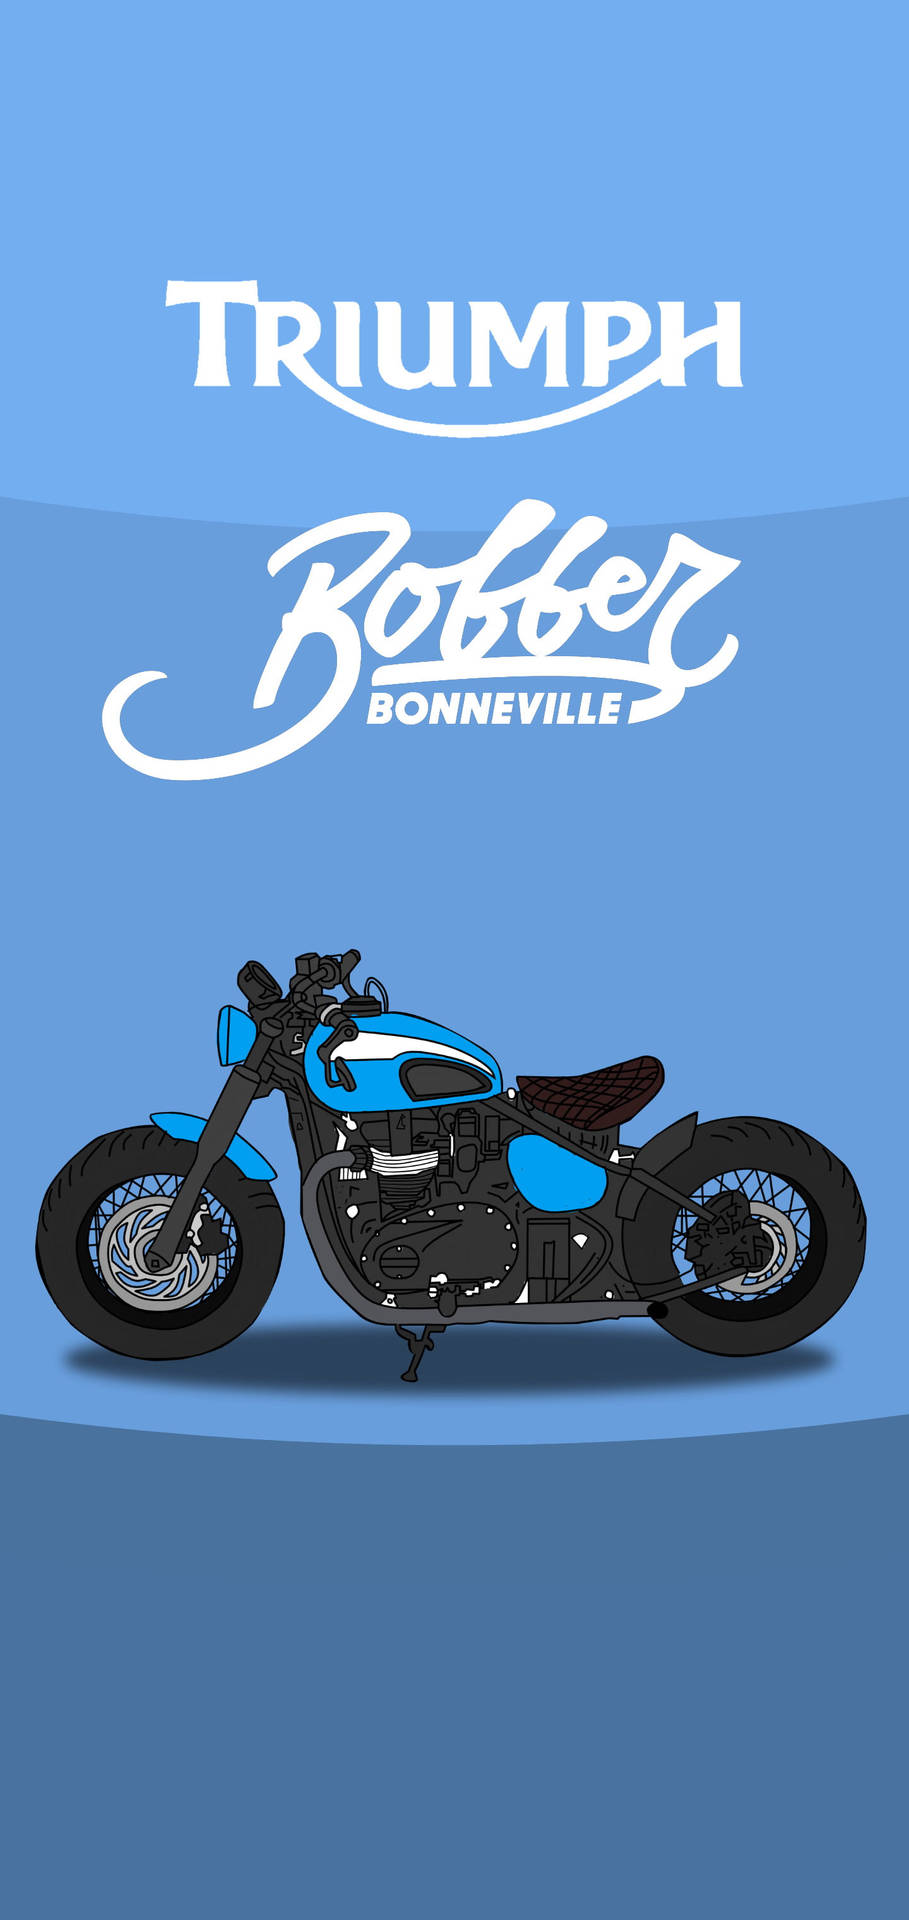 Majestic Triumph Bonneville Bobber Motorcycle Background